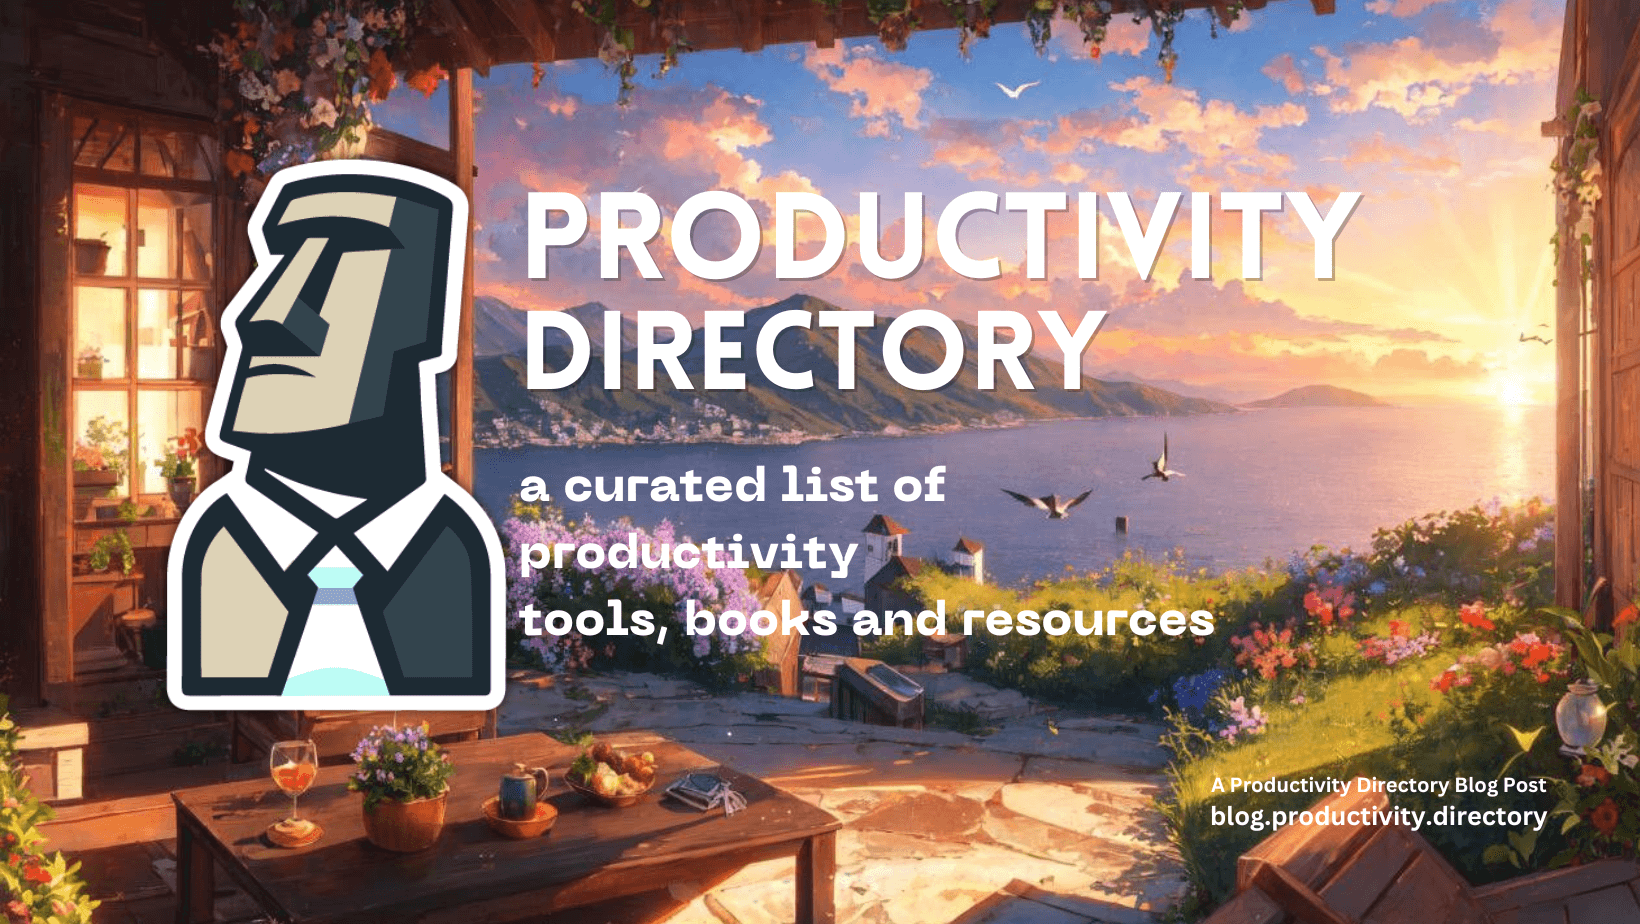 (c) Productivity.directory